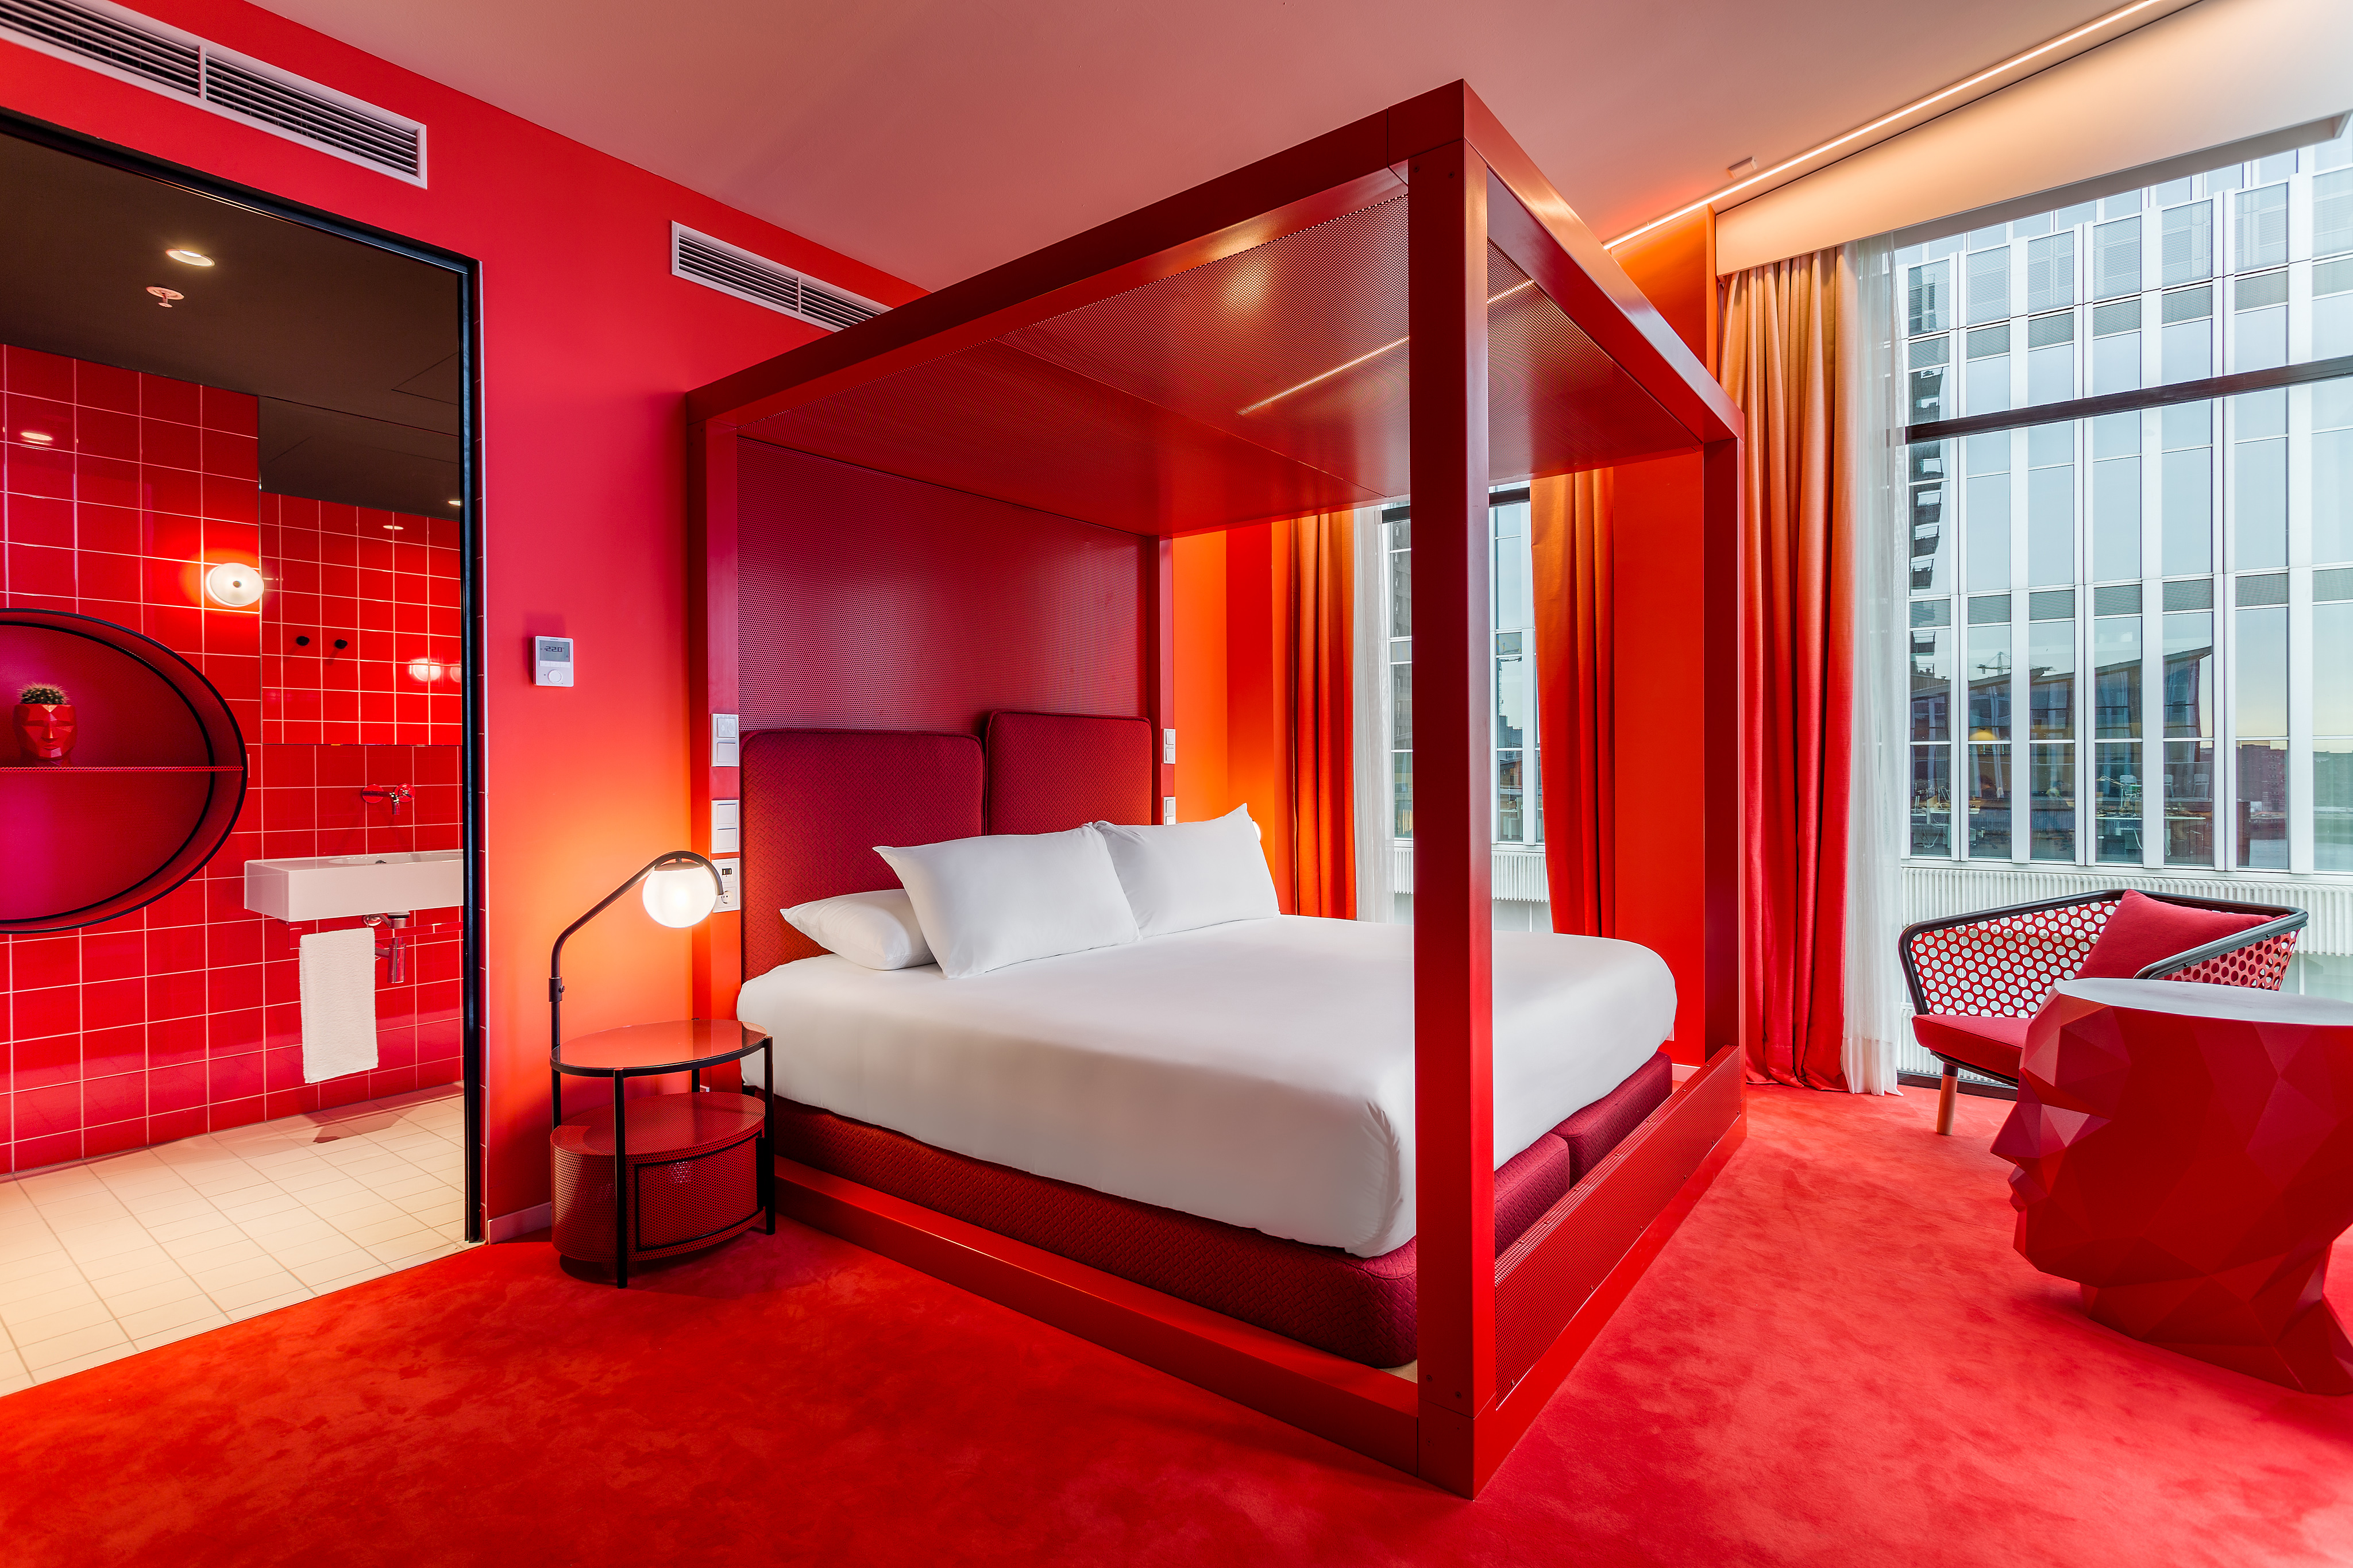 Нестандартные номера. Красивая комната. Комната отеля. Красивая комната в отеле. Отель красная комната.